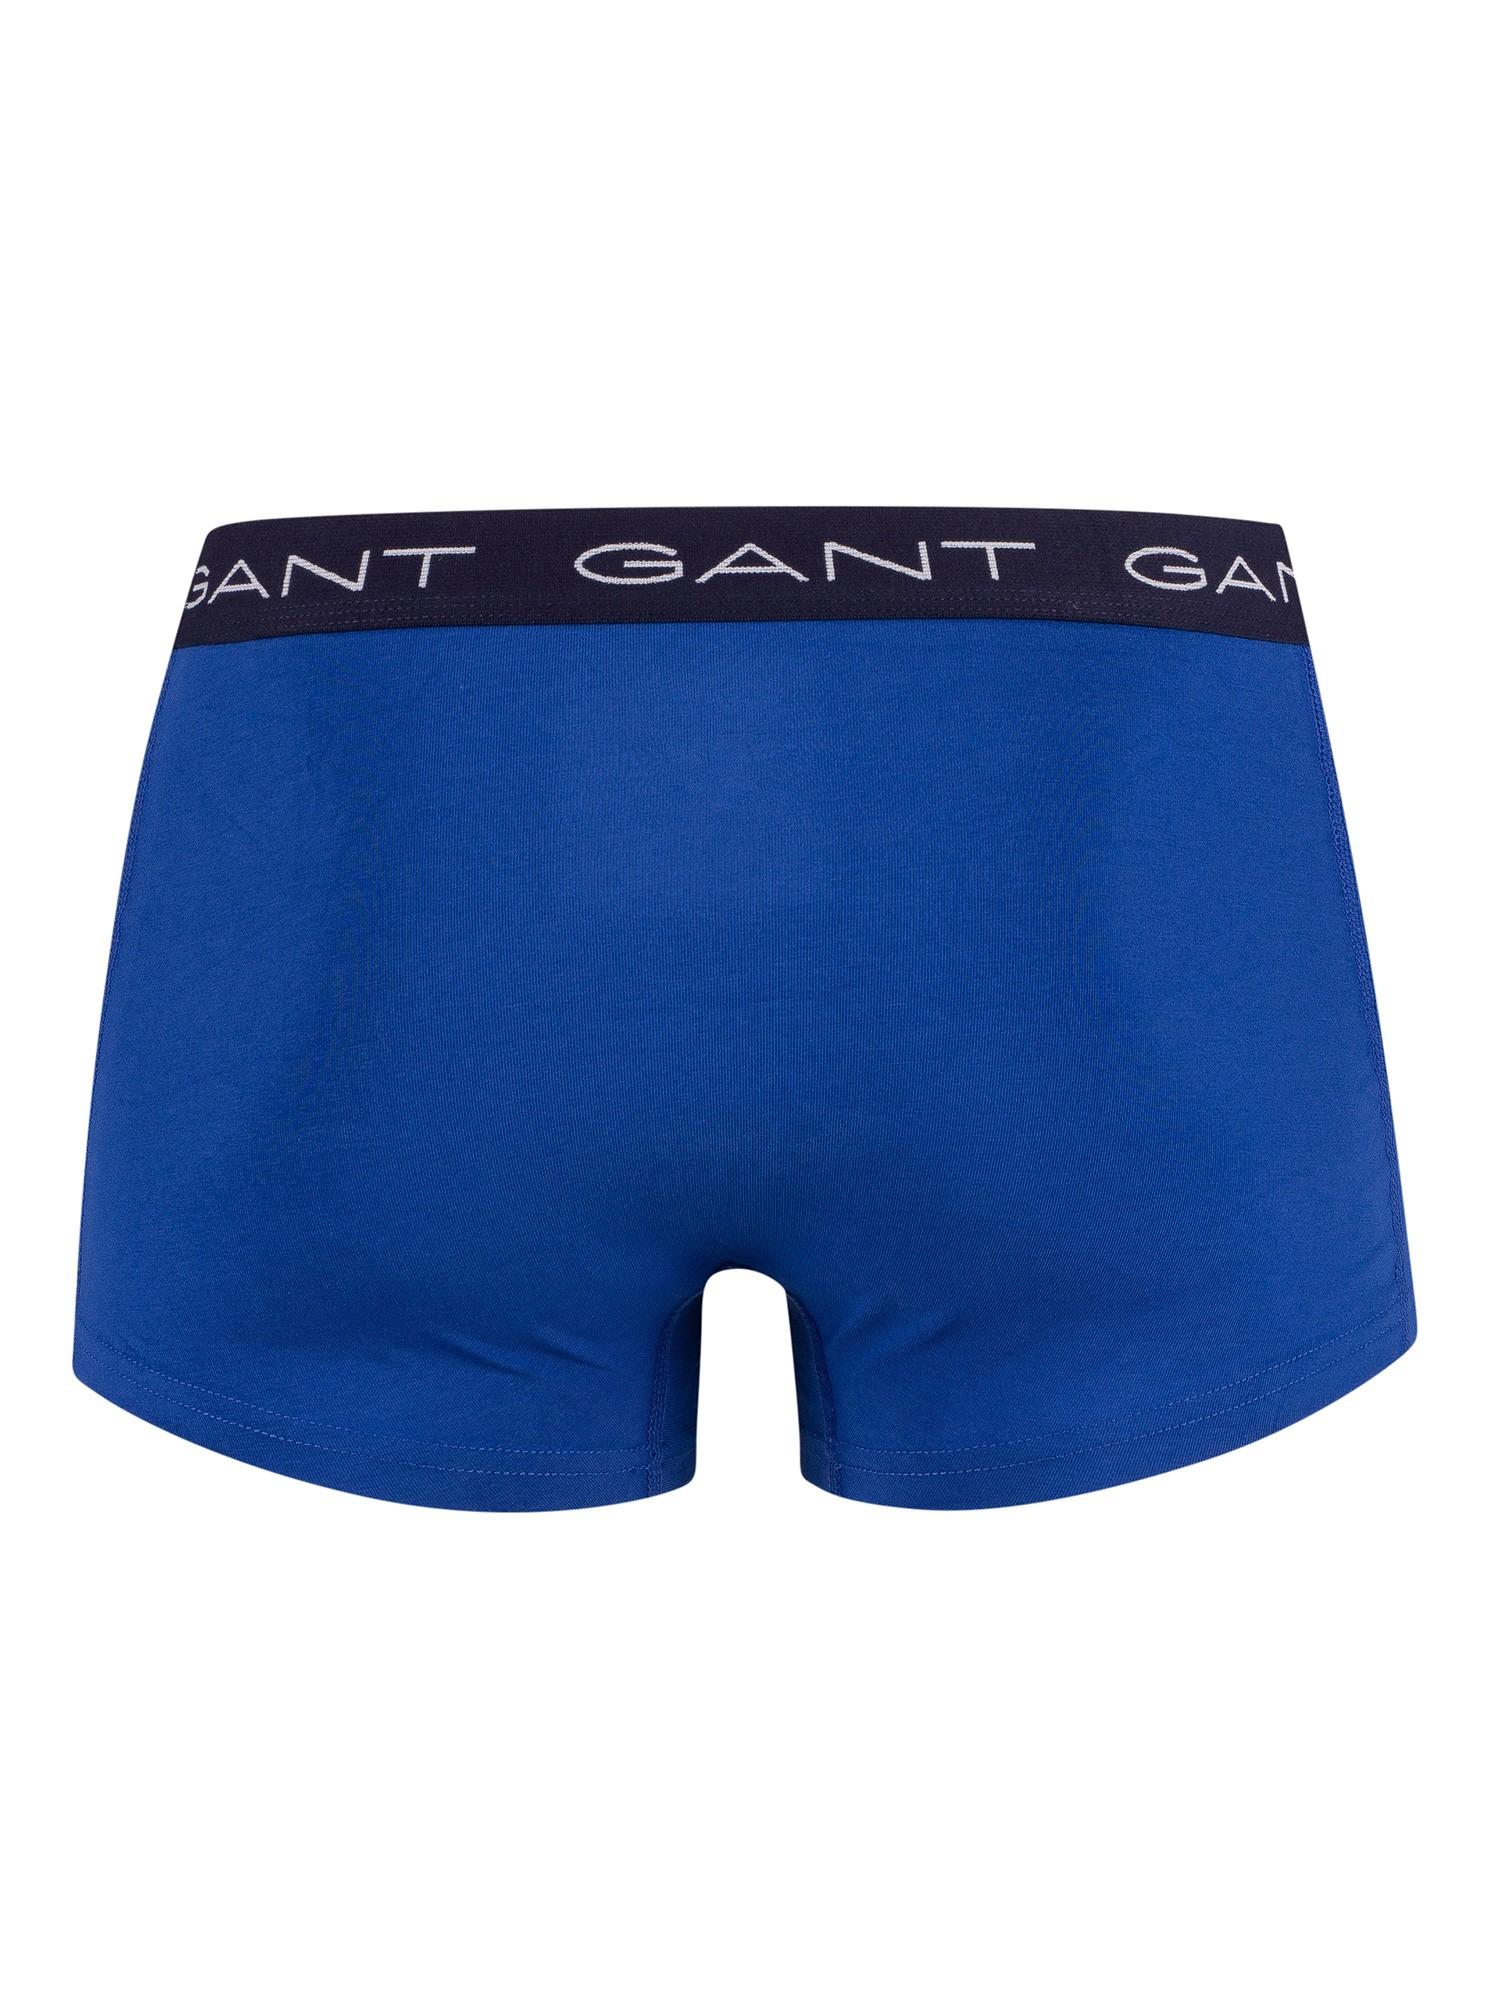 GANT Men's 3 Pack Essentials Trunks Blue 